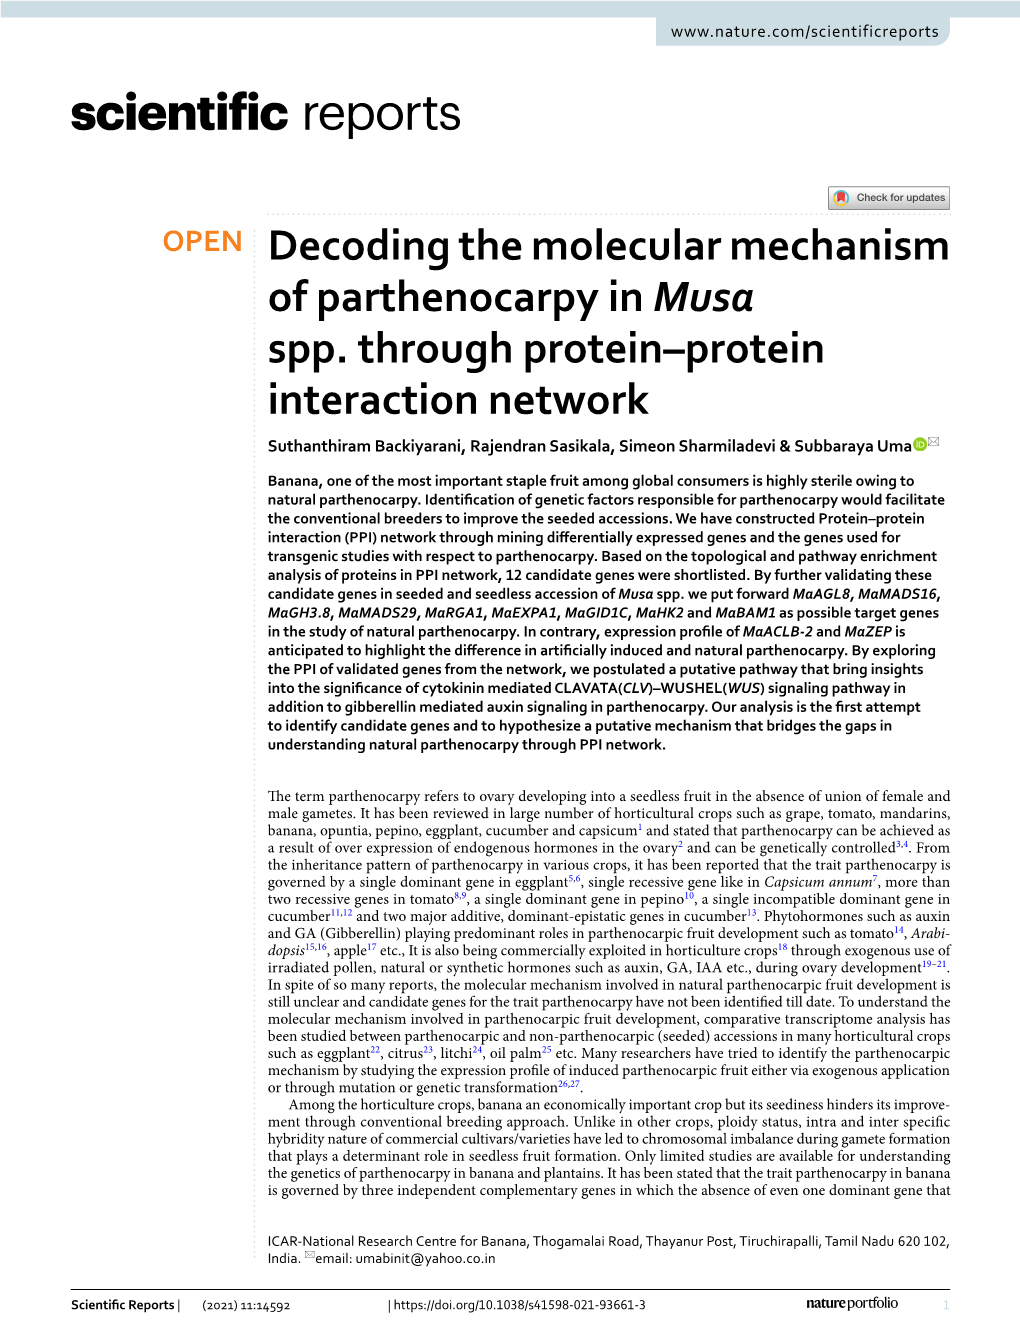 Decoding the Molecular Mechanism of Parthenocarpy in Musa Spp